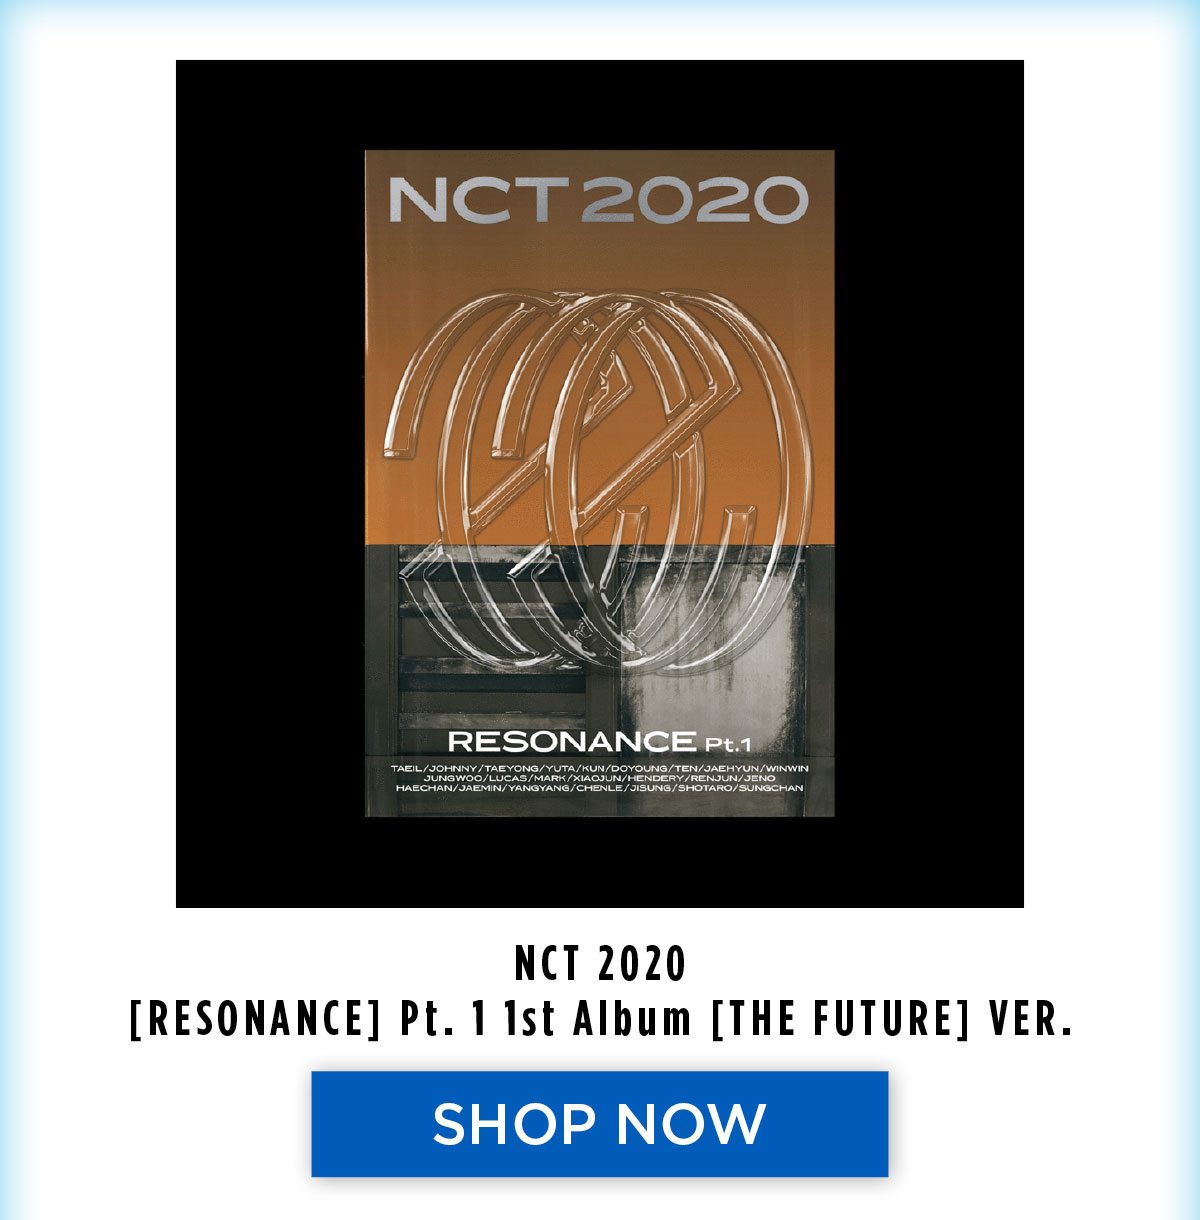 NCT 2020 - Resonance Pt. 1 1st Album - the future version